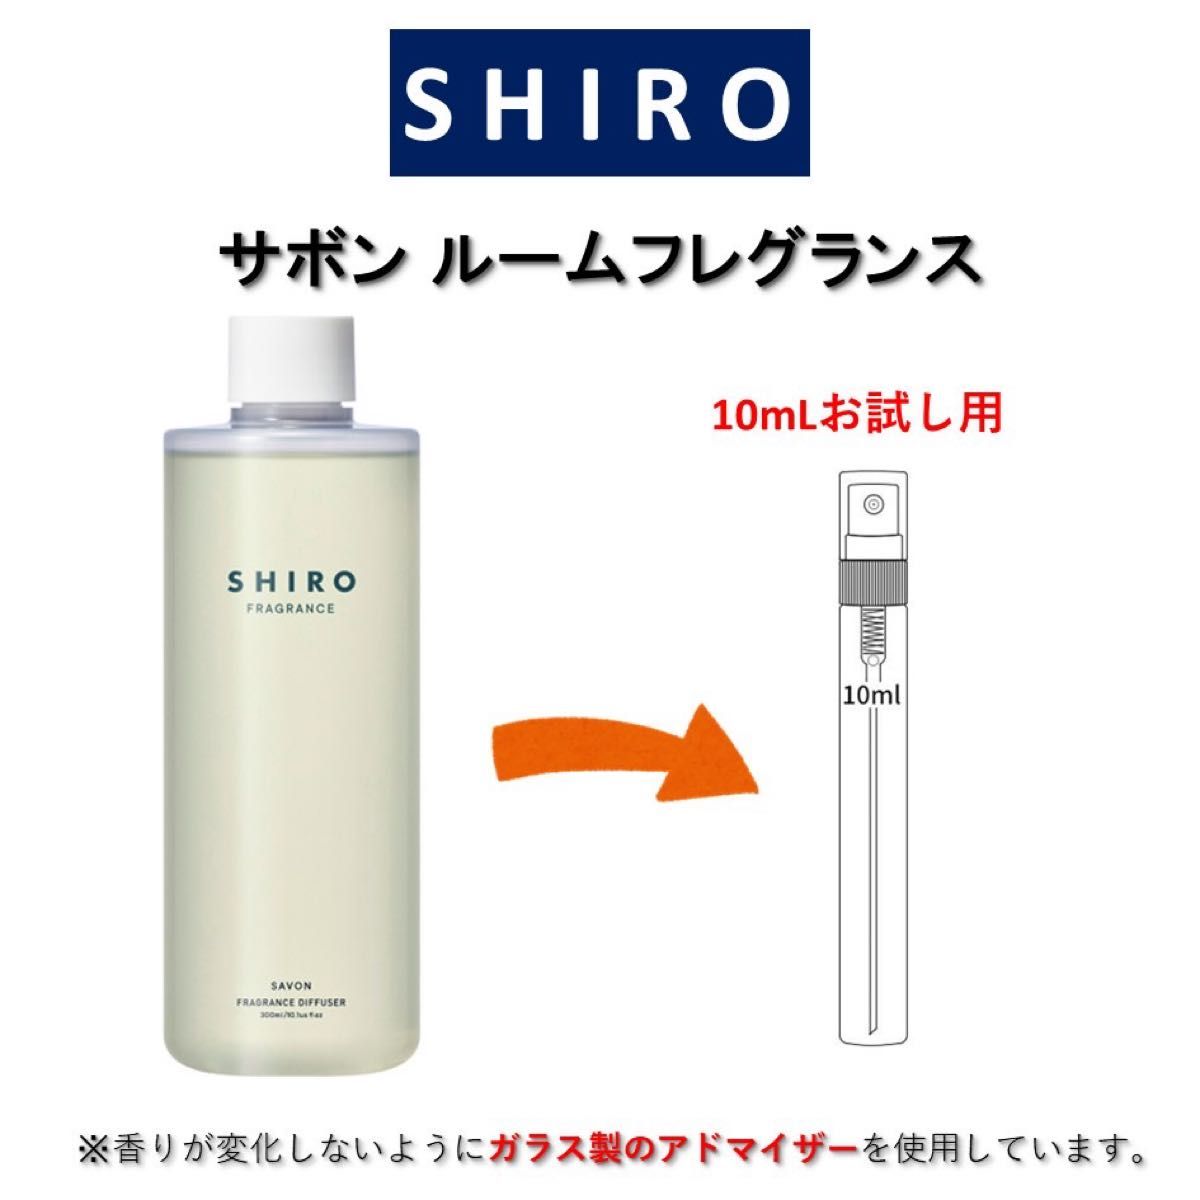 SHIRO サボン ルームフレグランス お試しサンプル (10mL)